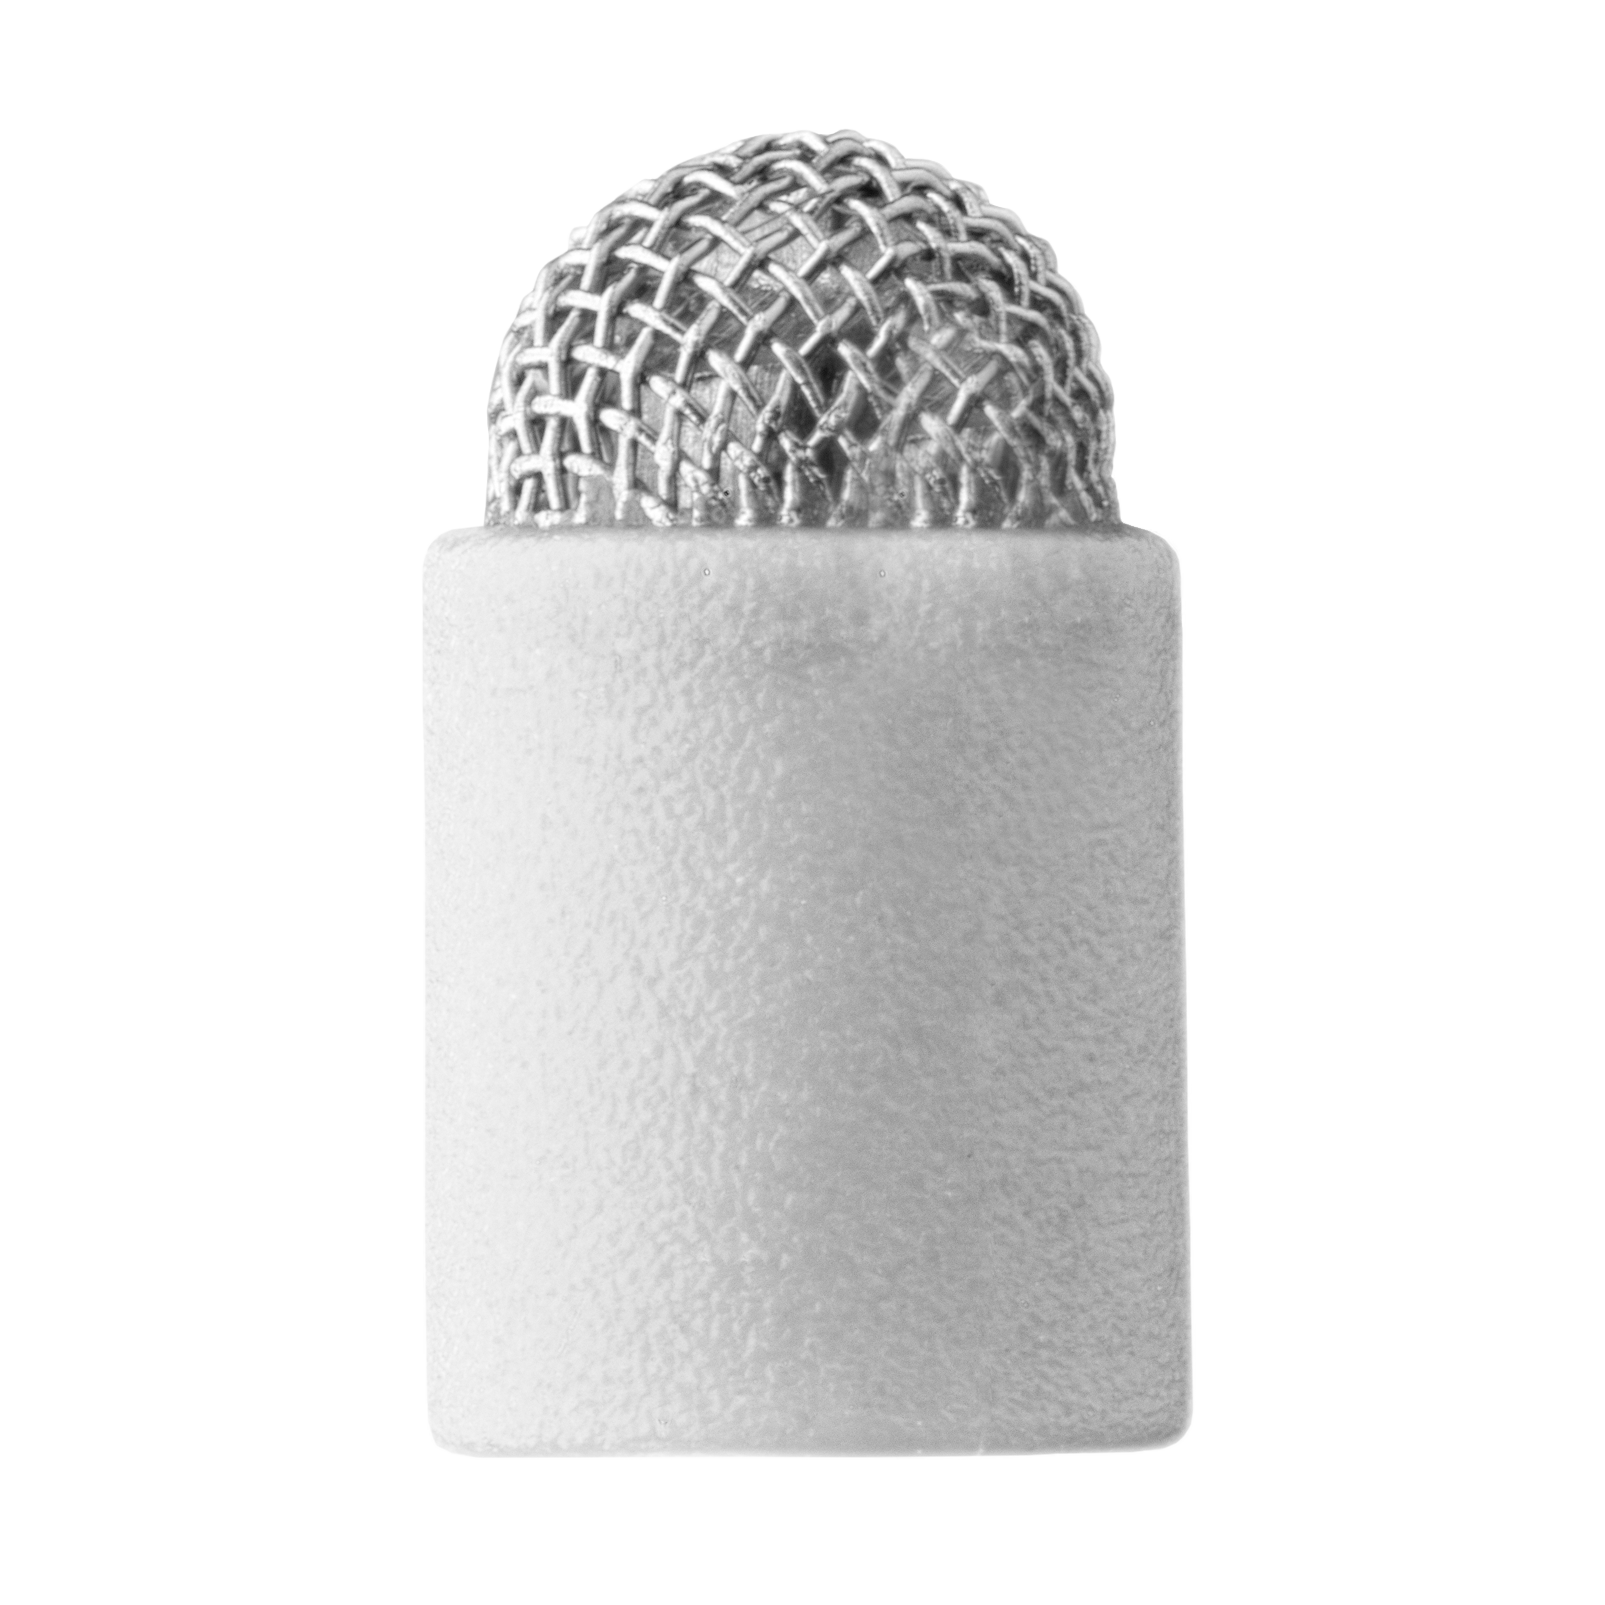 WM82 (5 Pack) - White - Wiremesh caps for MicroLite microphones - Hero